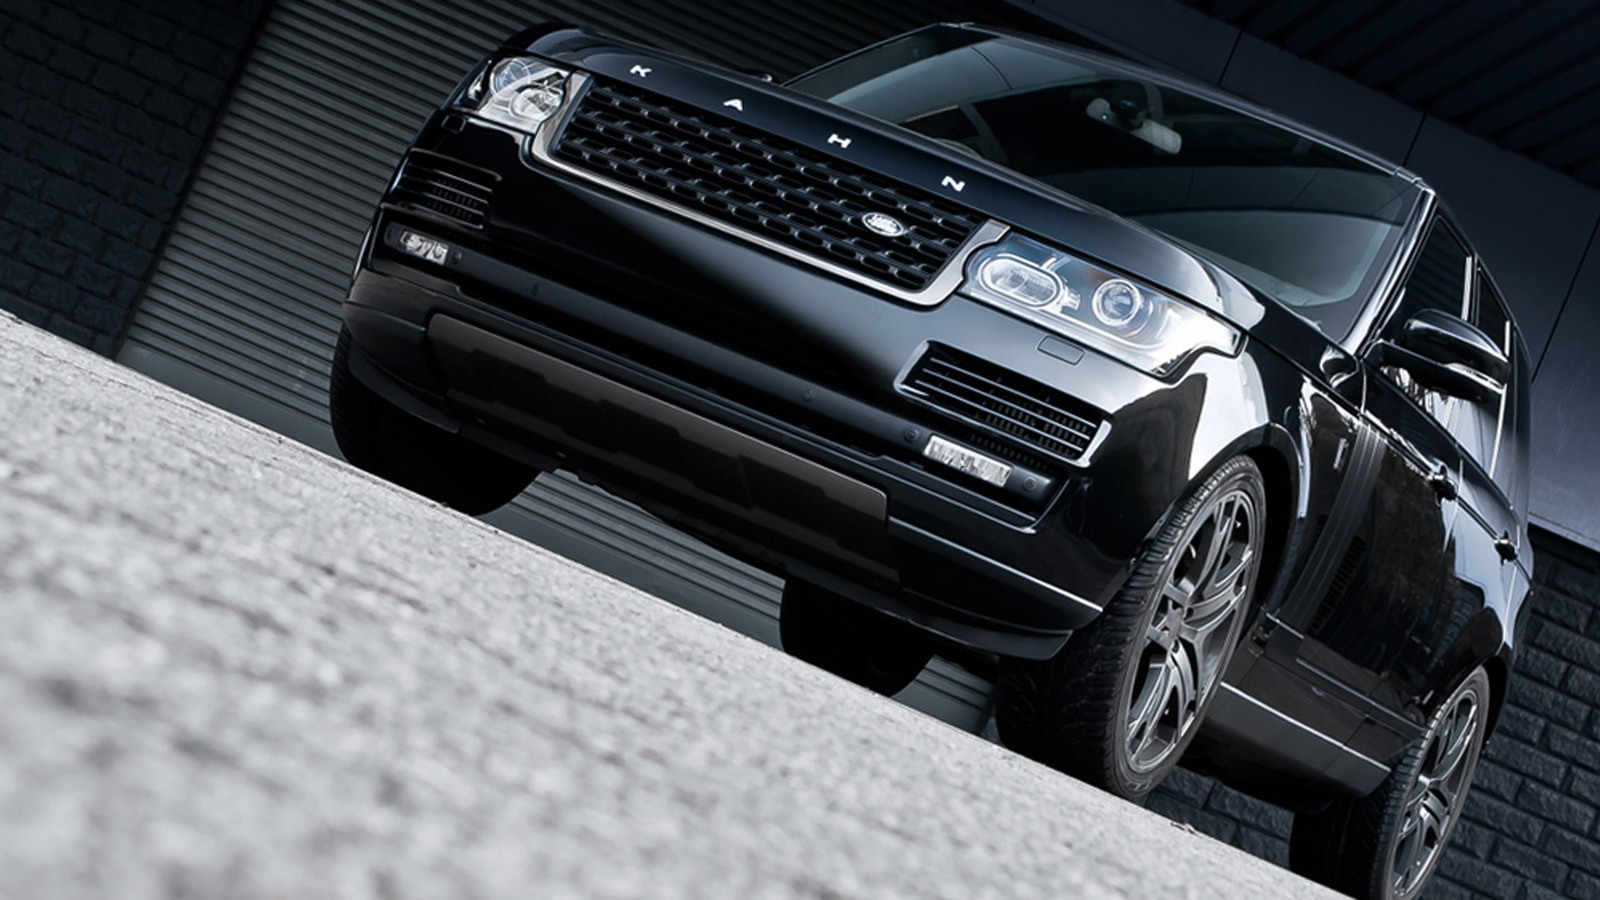 2013 Land Rover Range Rover by A. Kahn Design